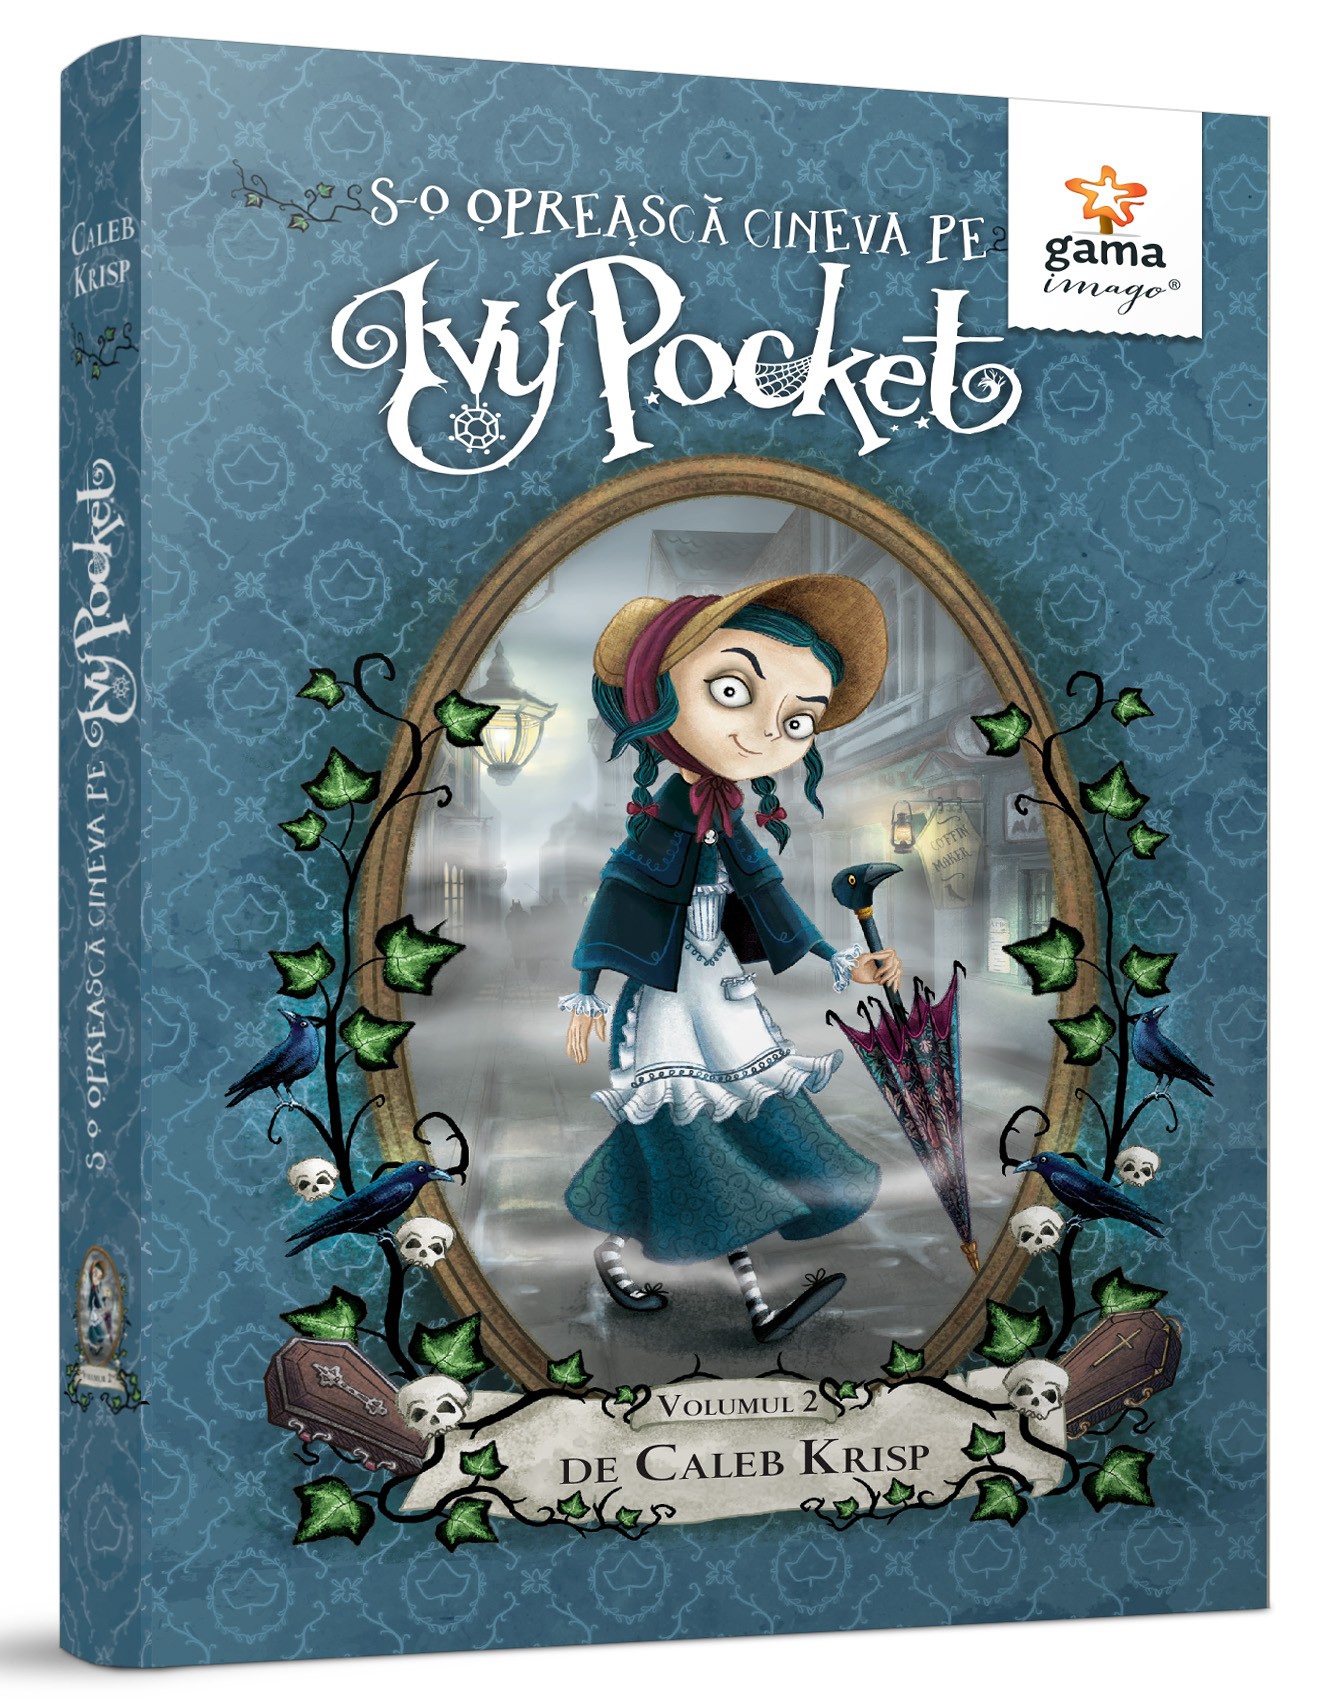 S-o opreasca cineva pe Ivy Pocket – Volumul 2 | Caleb Krisp carturesti.ro poza bestsellers.ro